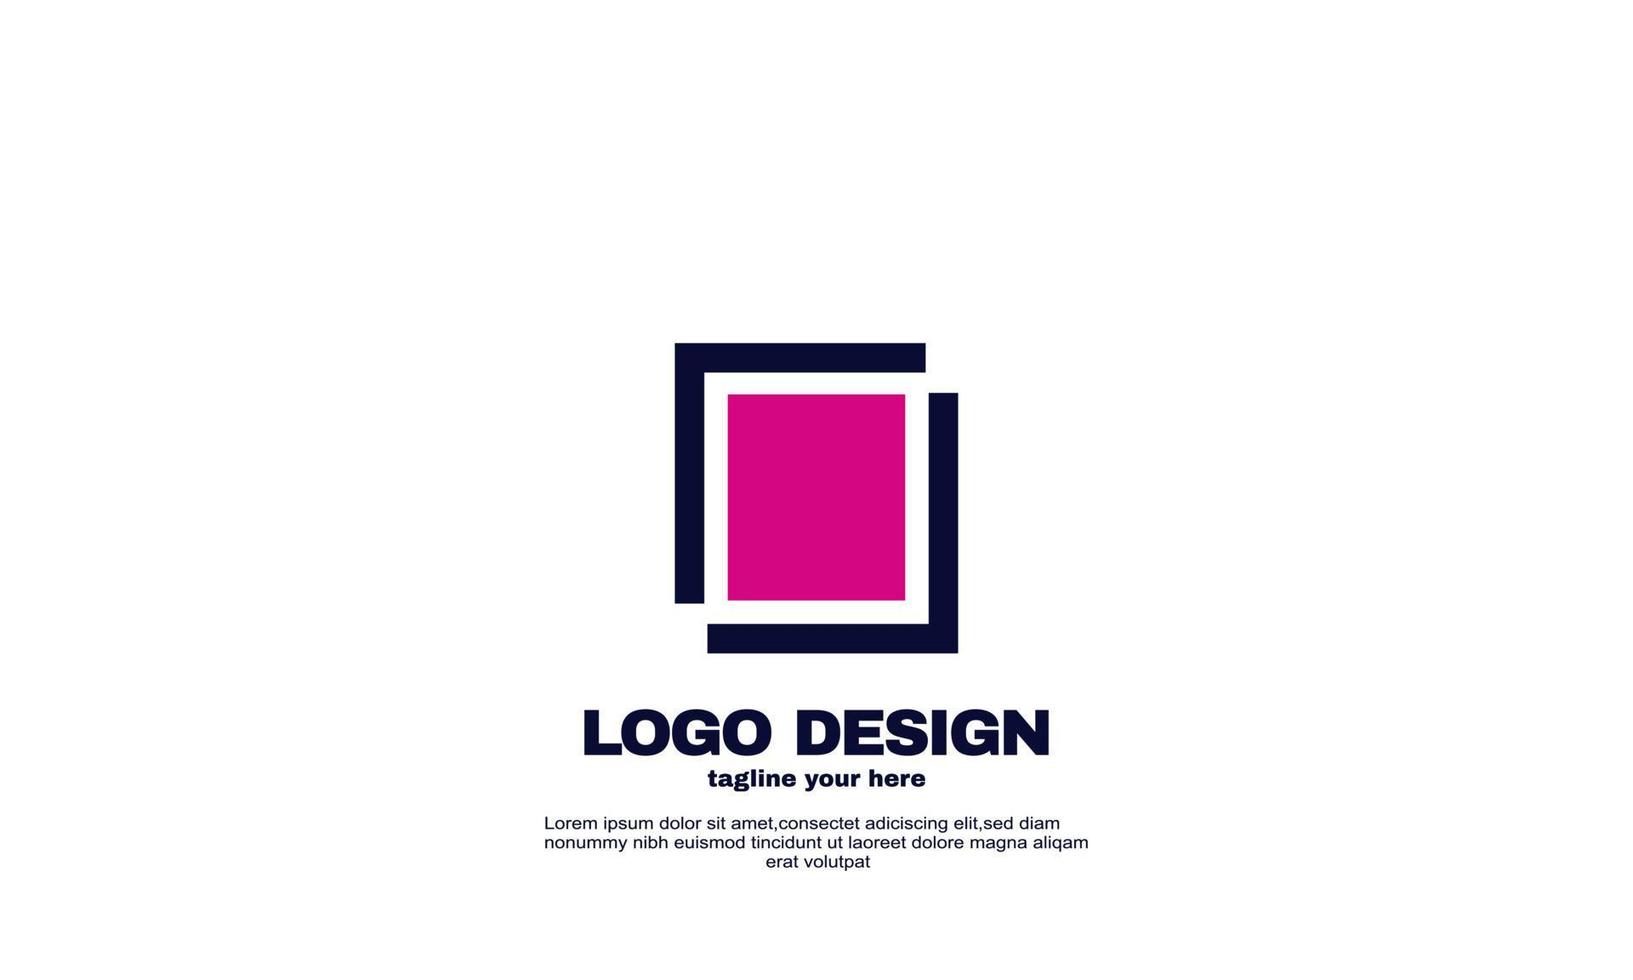 elementos de design criativo abstrato de vetor de estoque seu modelo de design de logotipo exclusivo de negócios de empresa de identidade de marca